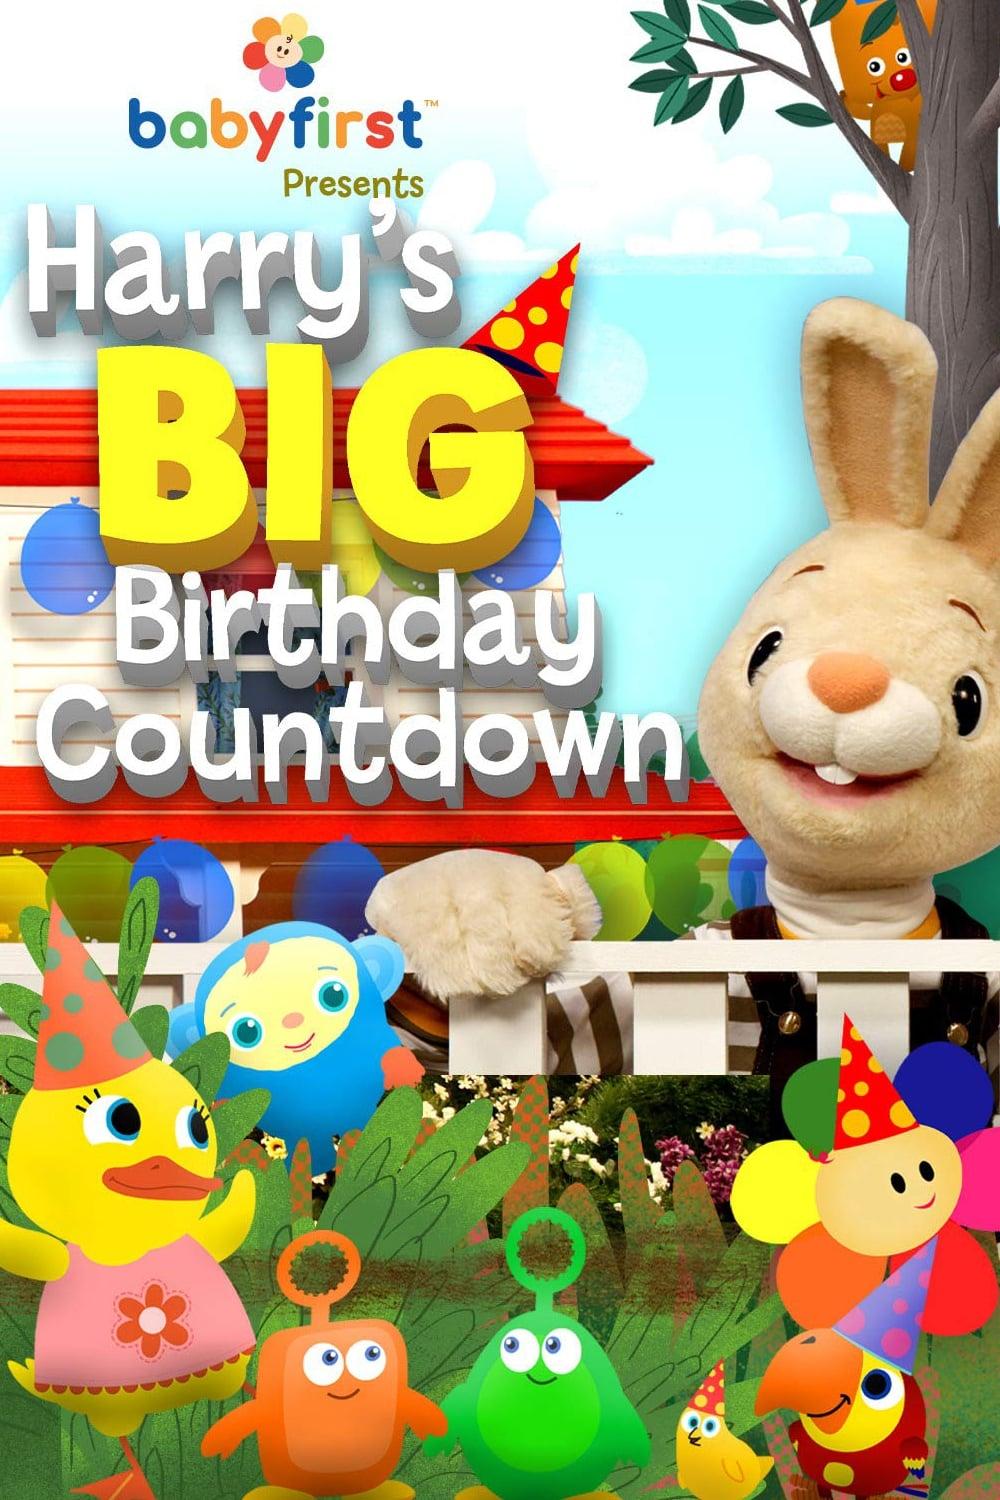 Harry's Big Birthday Countdown poster